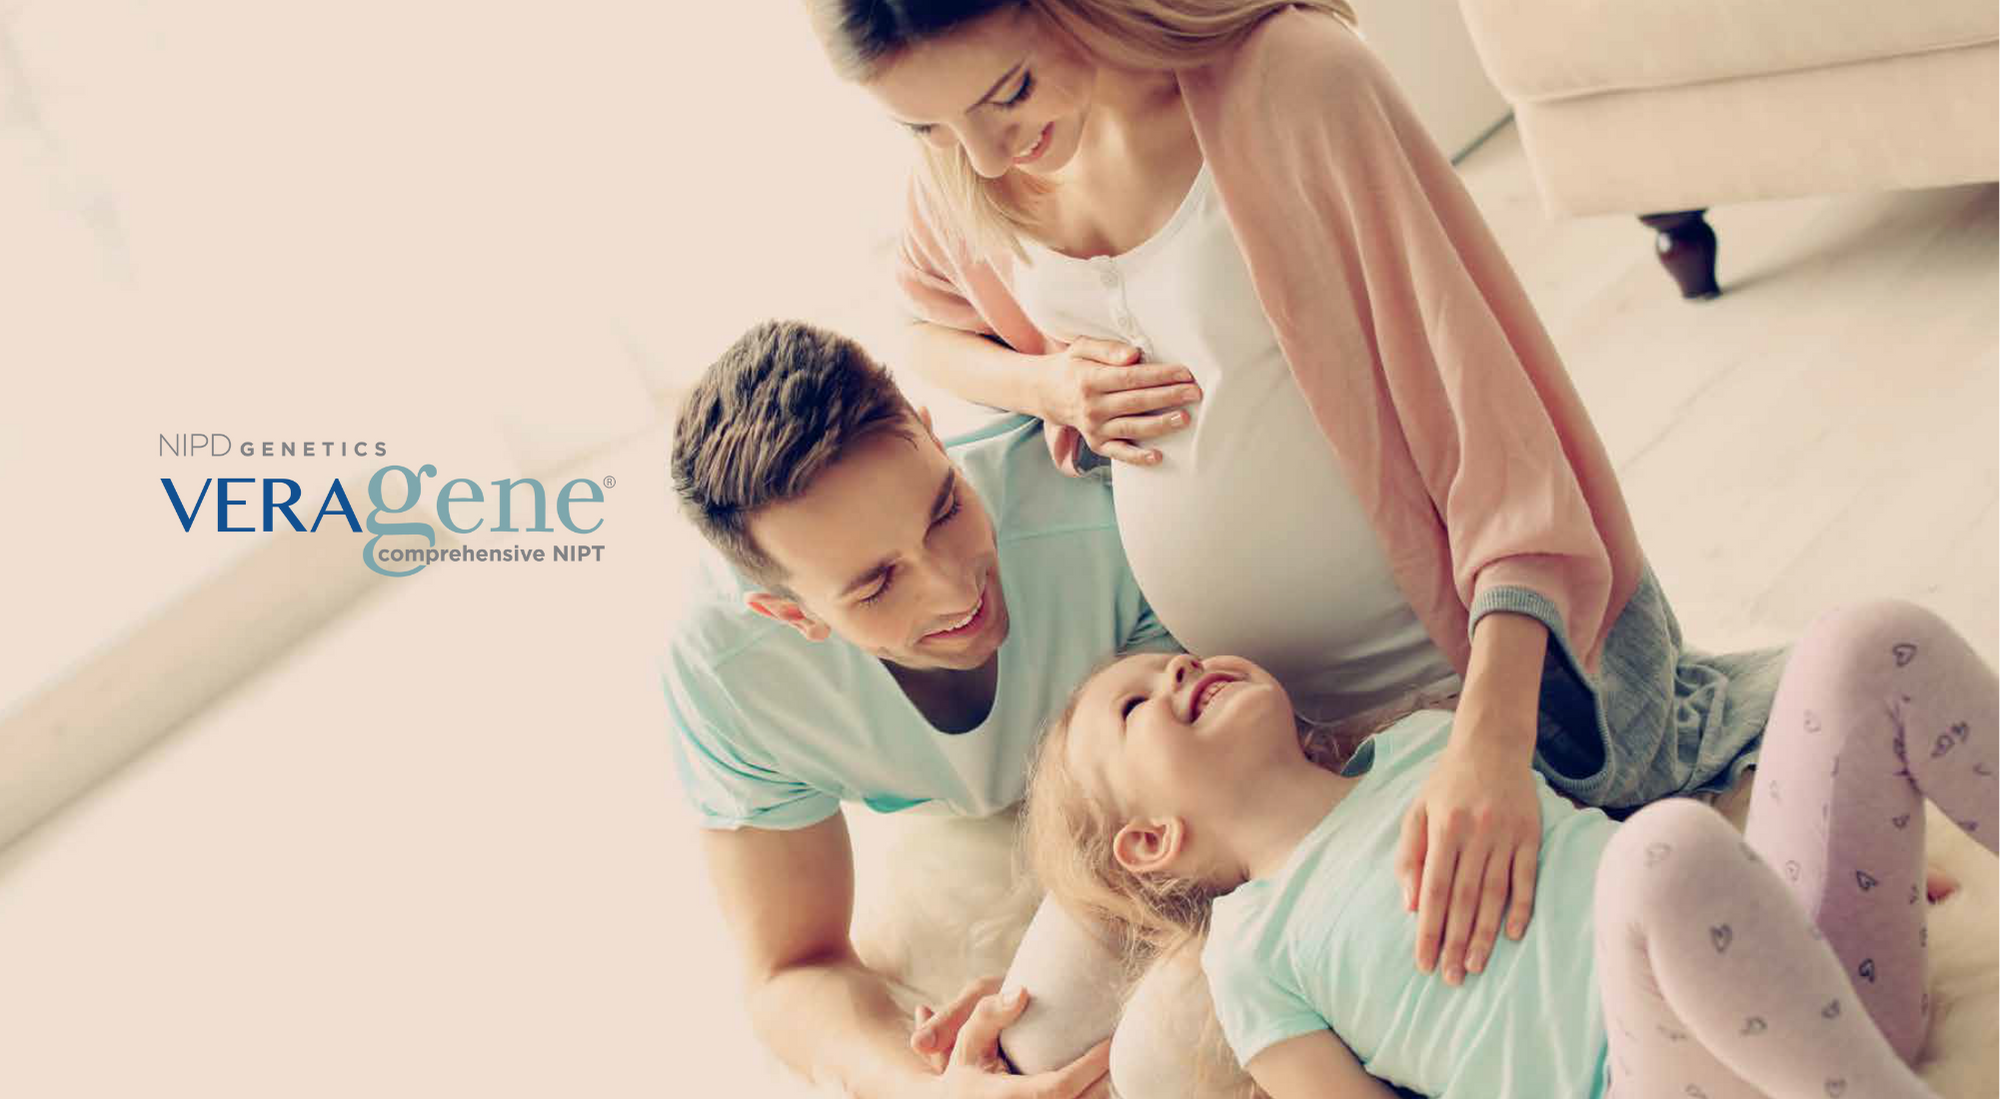 What should future parents know about VERAgene?